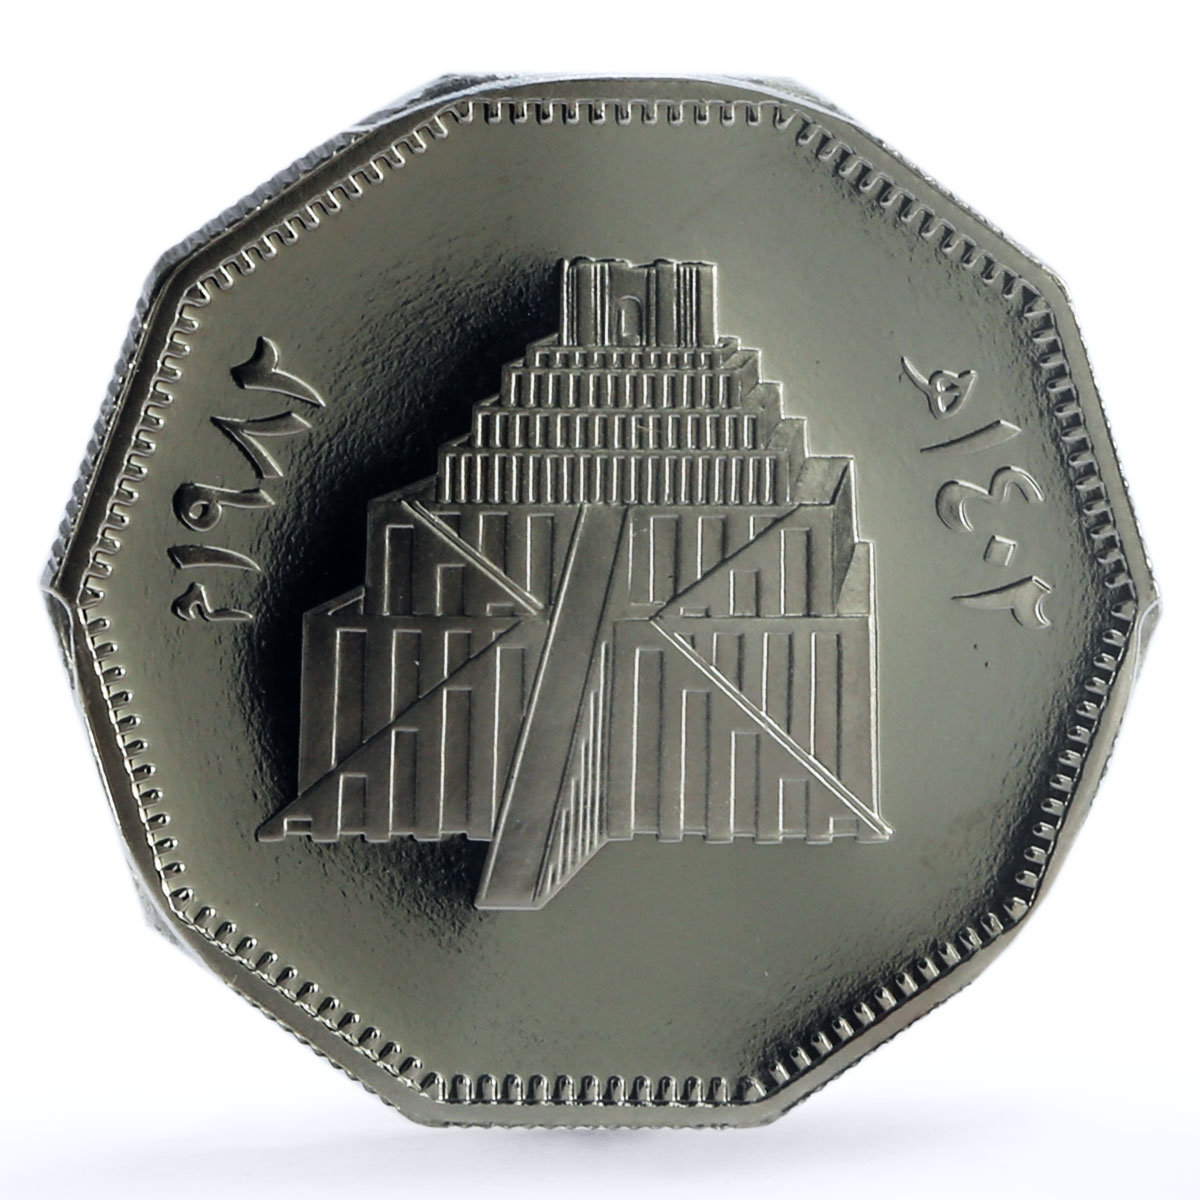 Iraq 1 dinar Babylon Tower Ziggurat PR68 PCGS nickel coin 1982